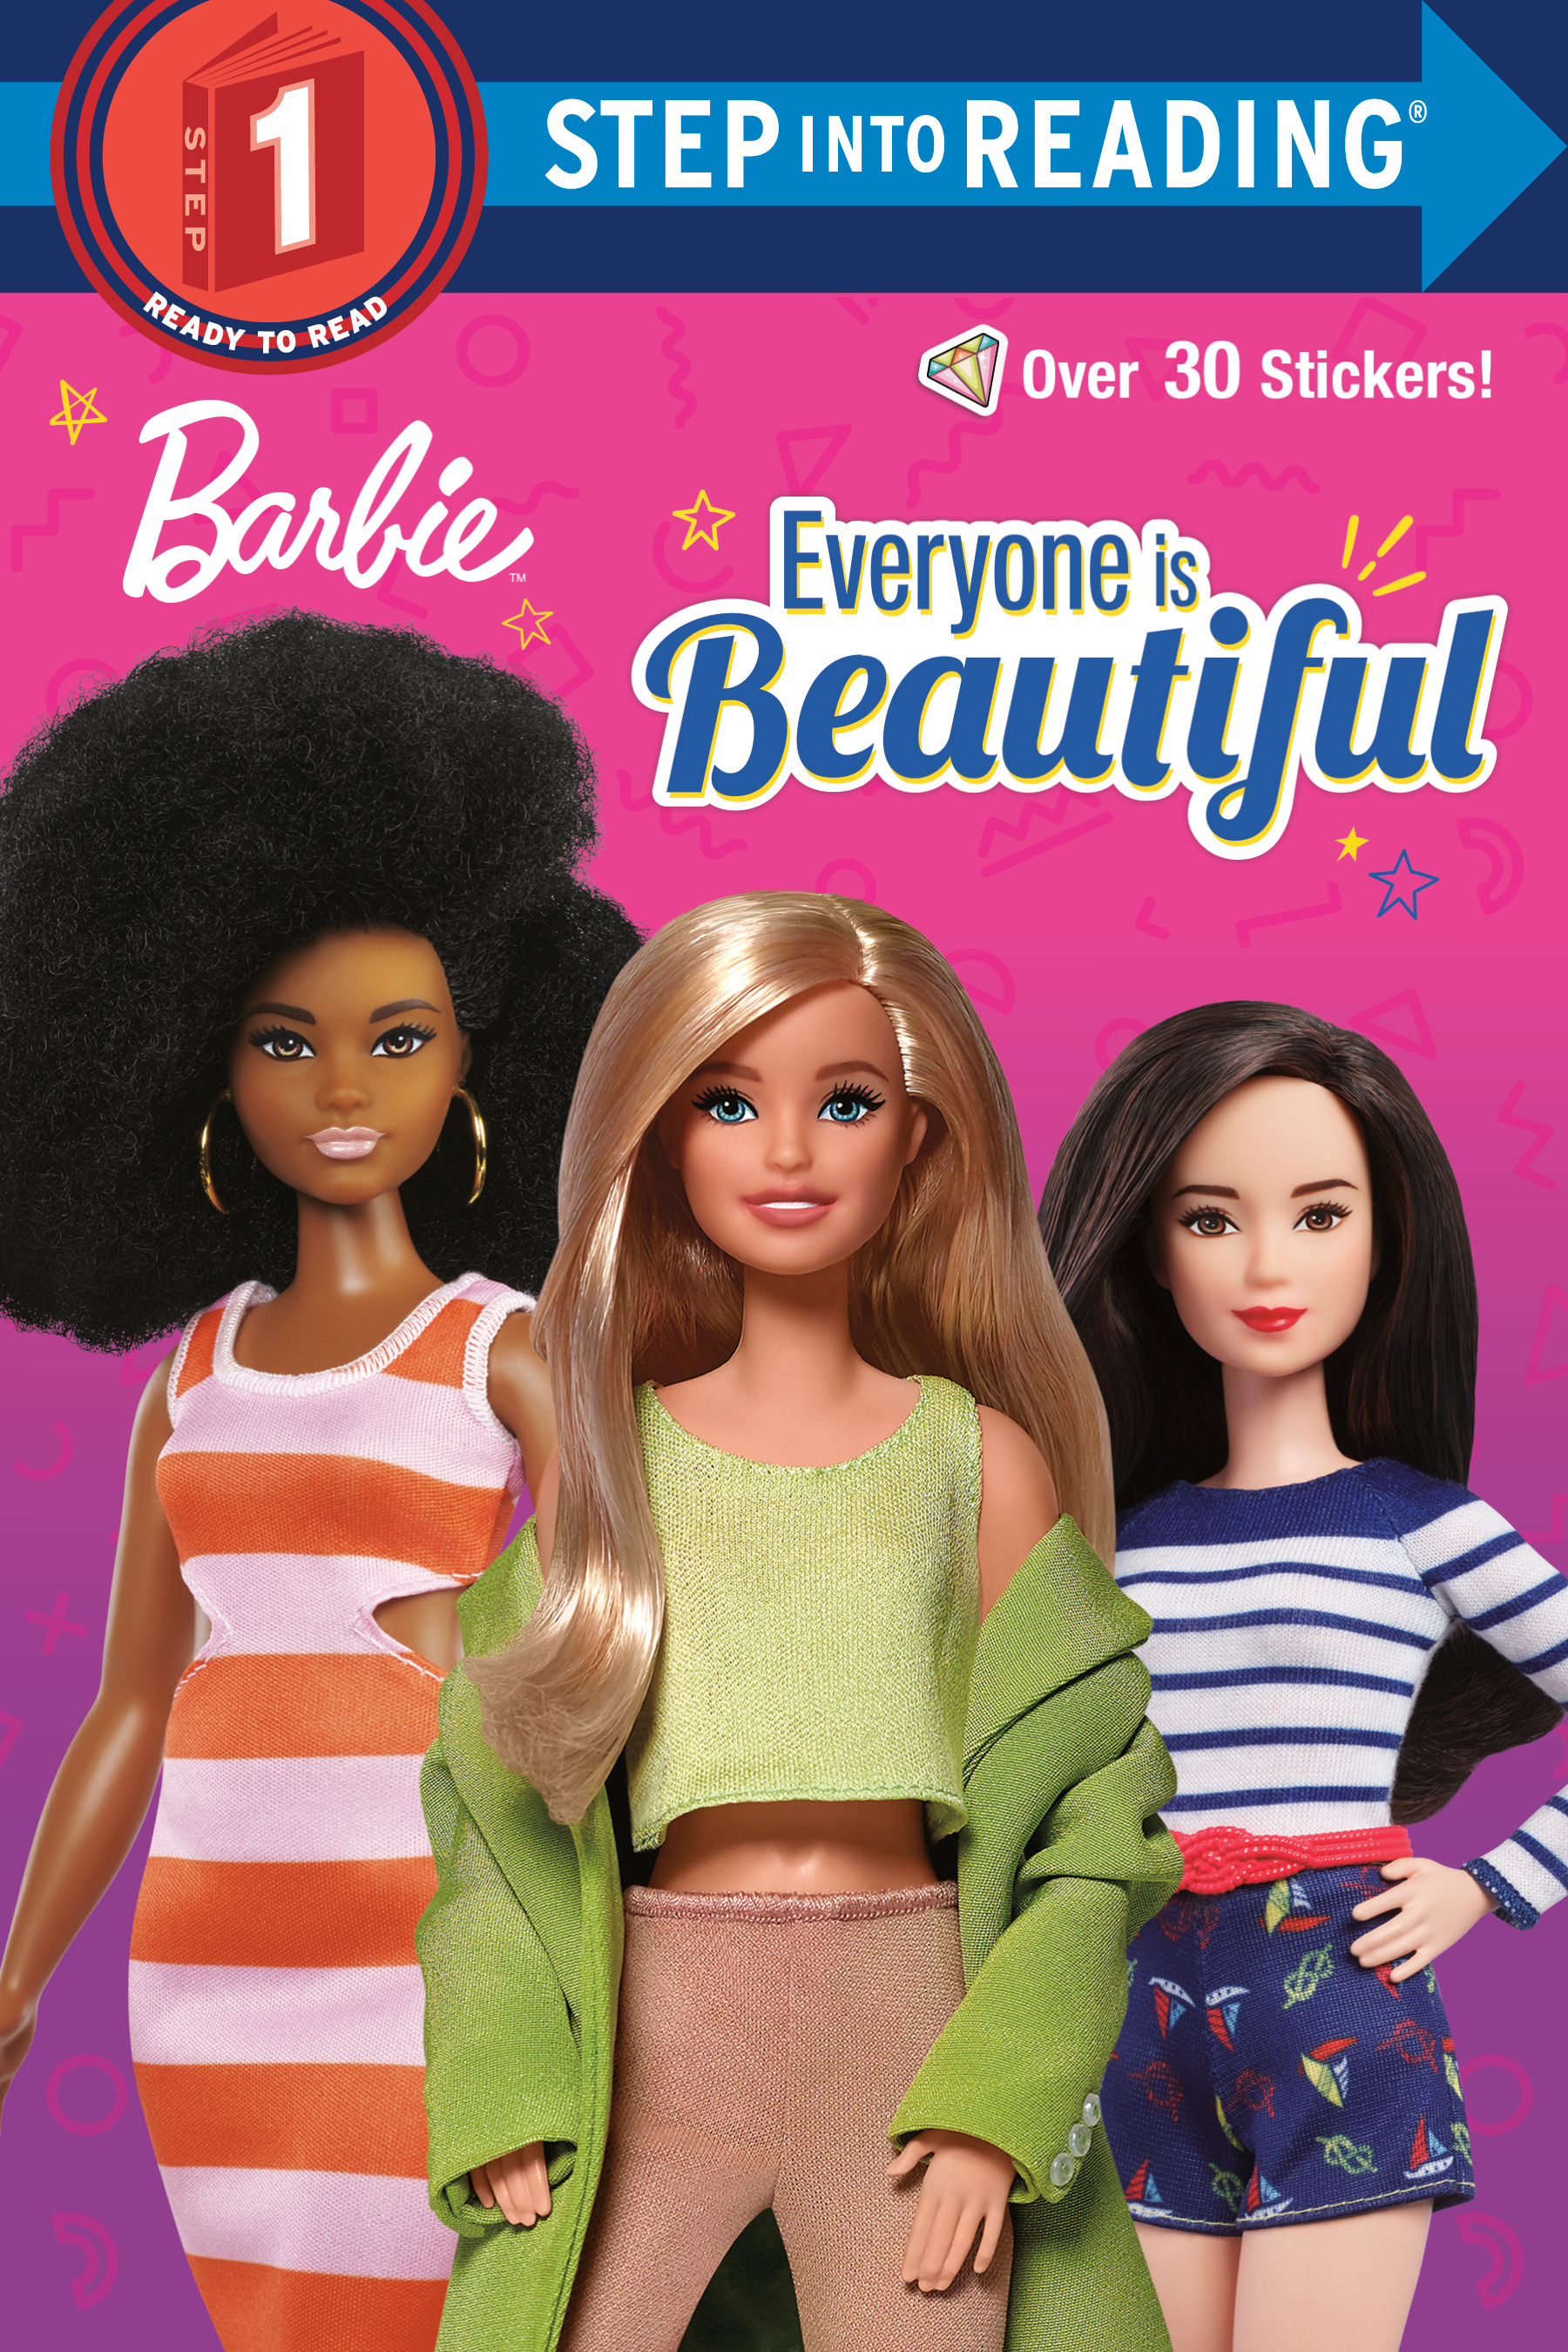 Everyone is Beautiful! (Barbie) | 